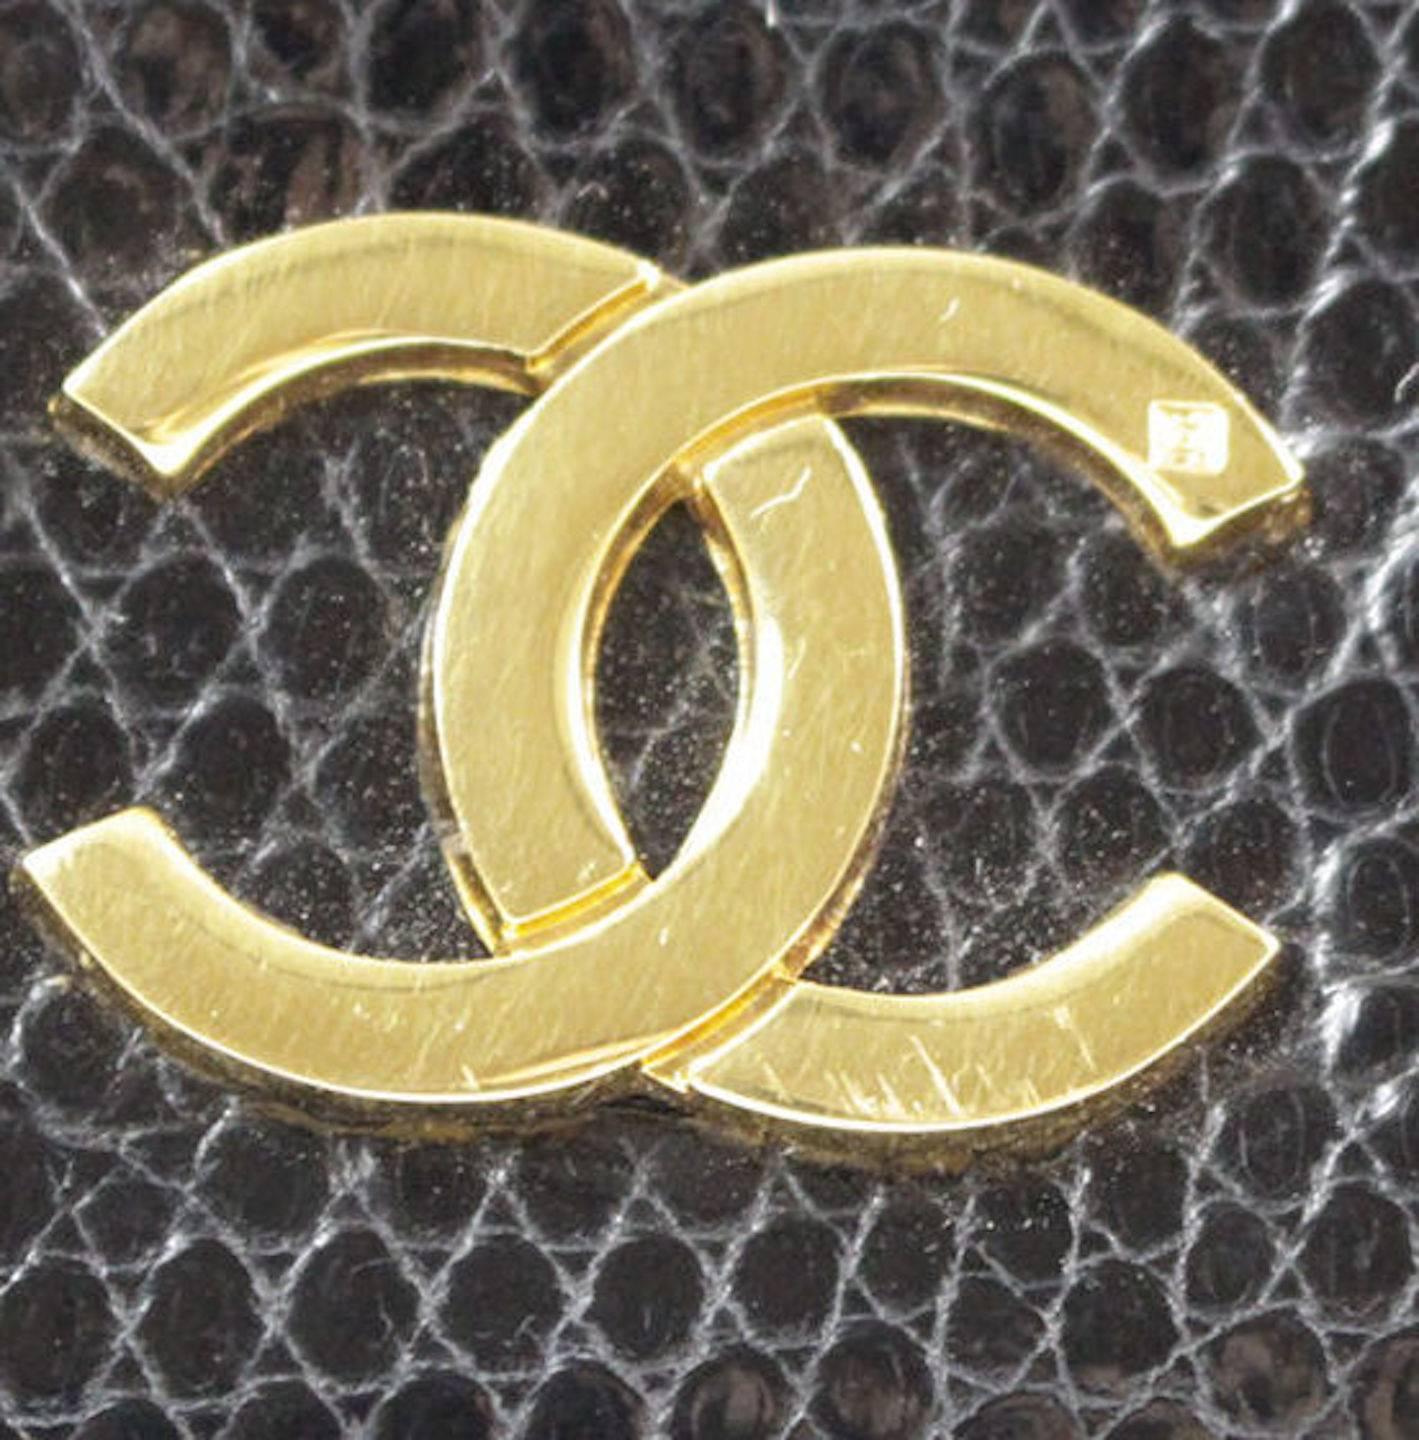 CURATOR'S NOTES

Chanel RARE Vintage Black Lizard Leather Gold CC Flap Crossbody Shoulder Bag  

Estimated value $10,000
Lizard
Gold hardware
Date code 0717118
Made in France
Measures 7.5" W x 4.8" H x 1.5" D
Shoulder strap 36"